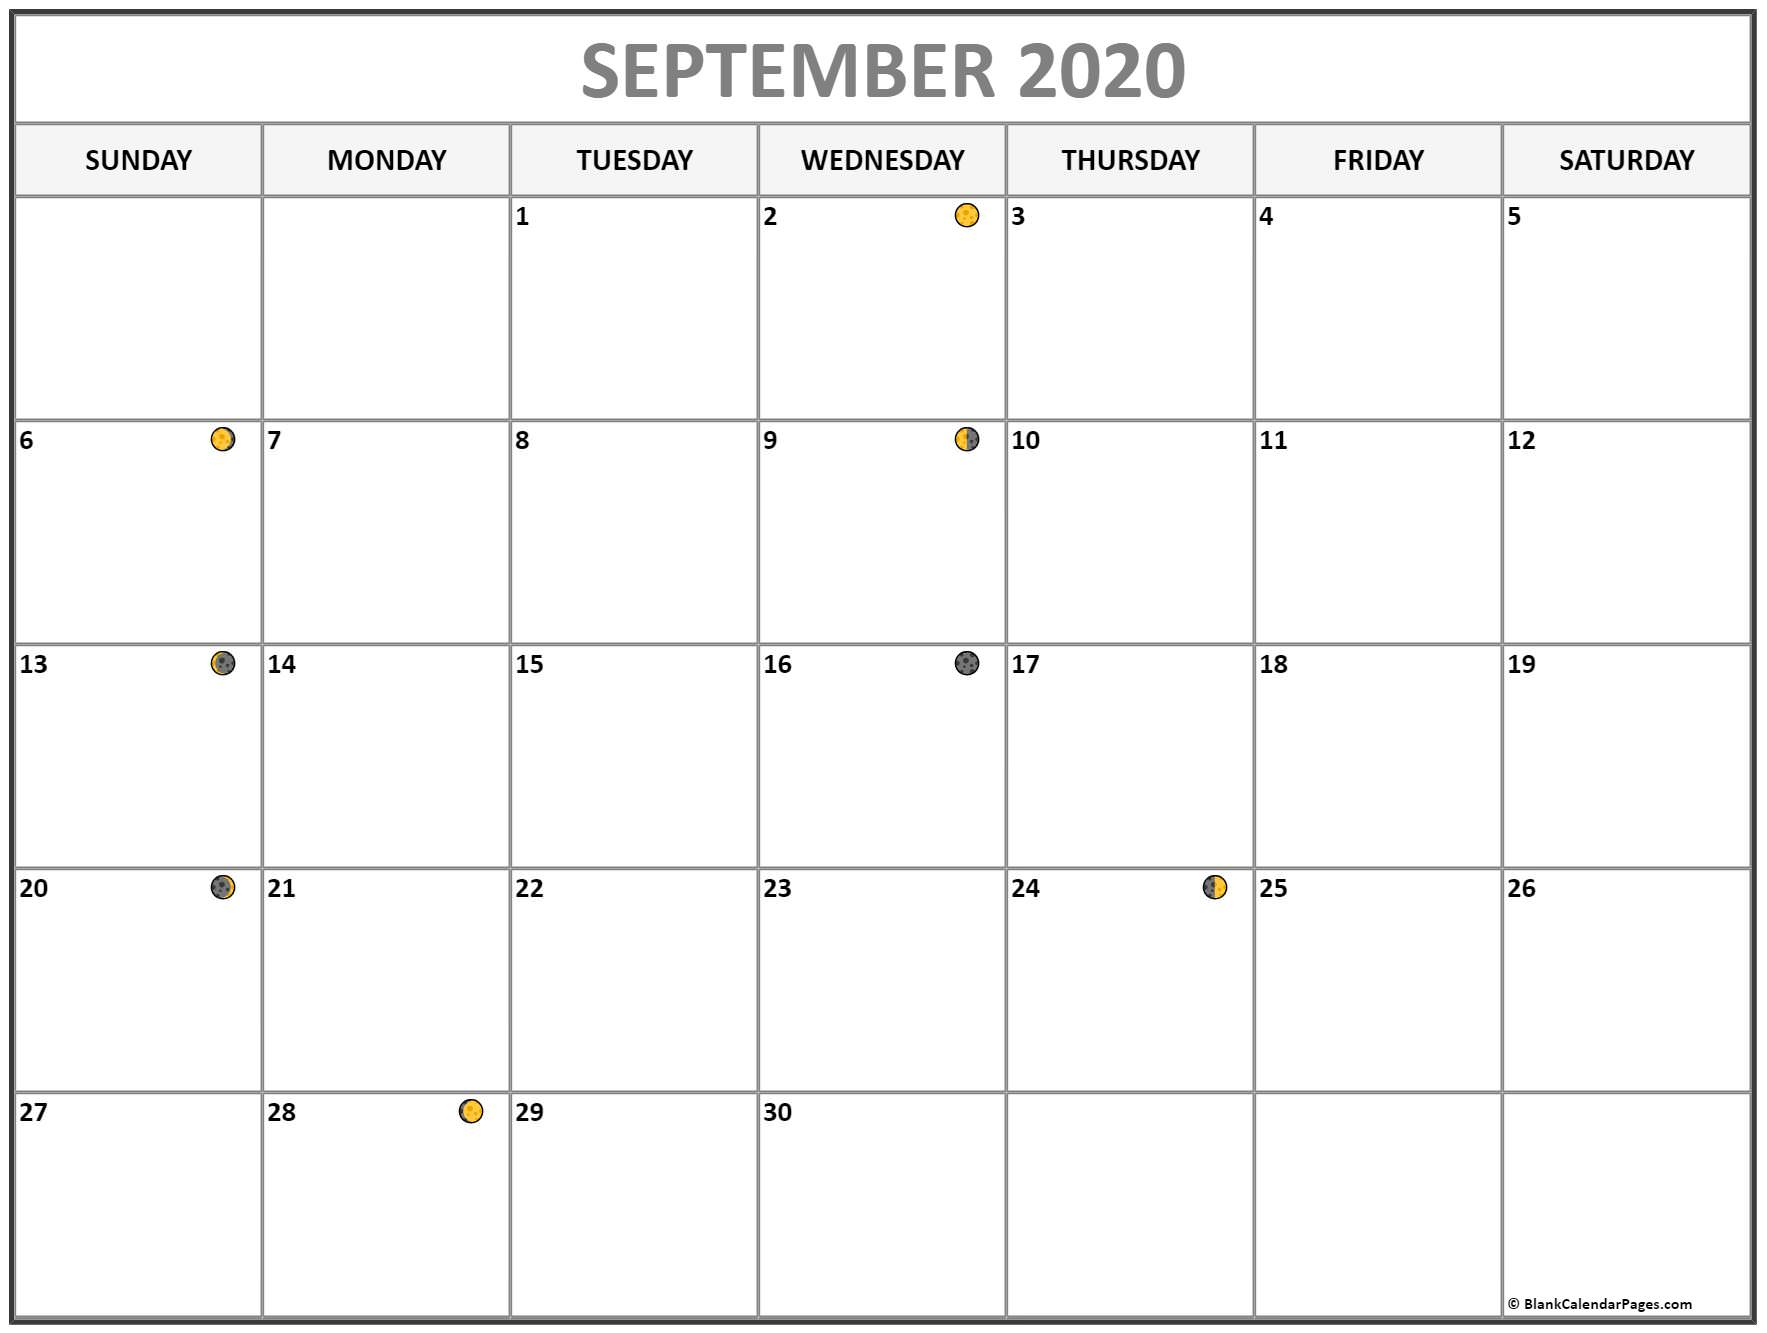 September 2020 Lunar Calendar | Moon Phase Calendar